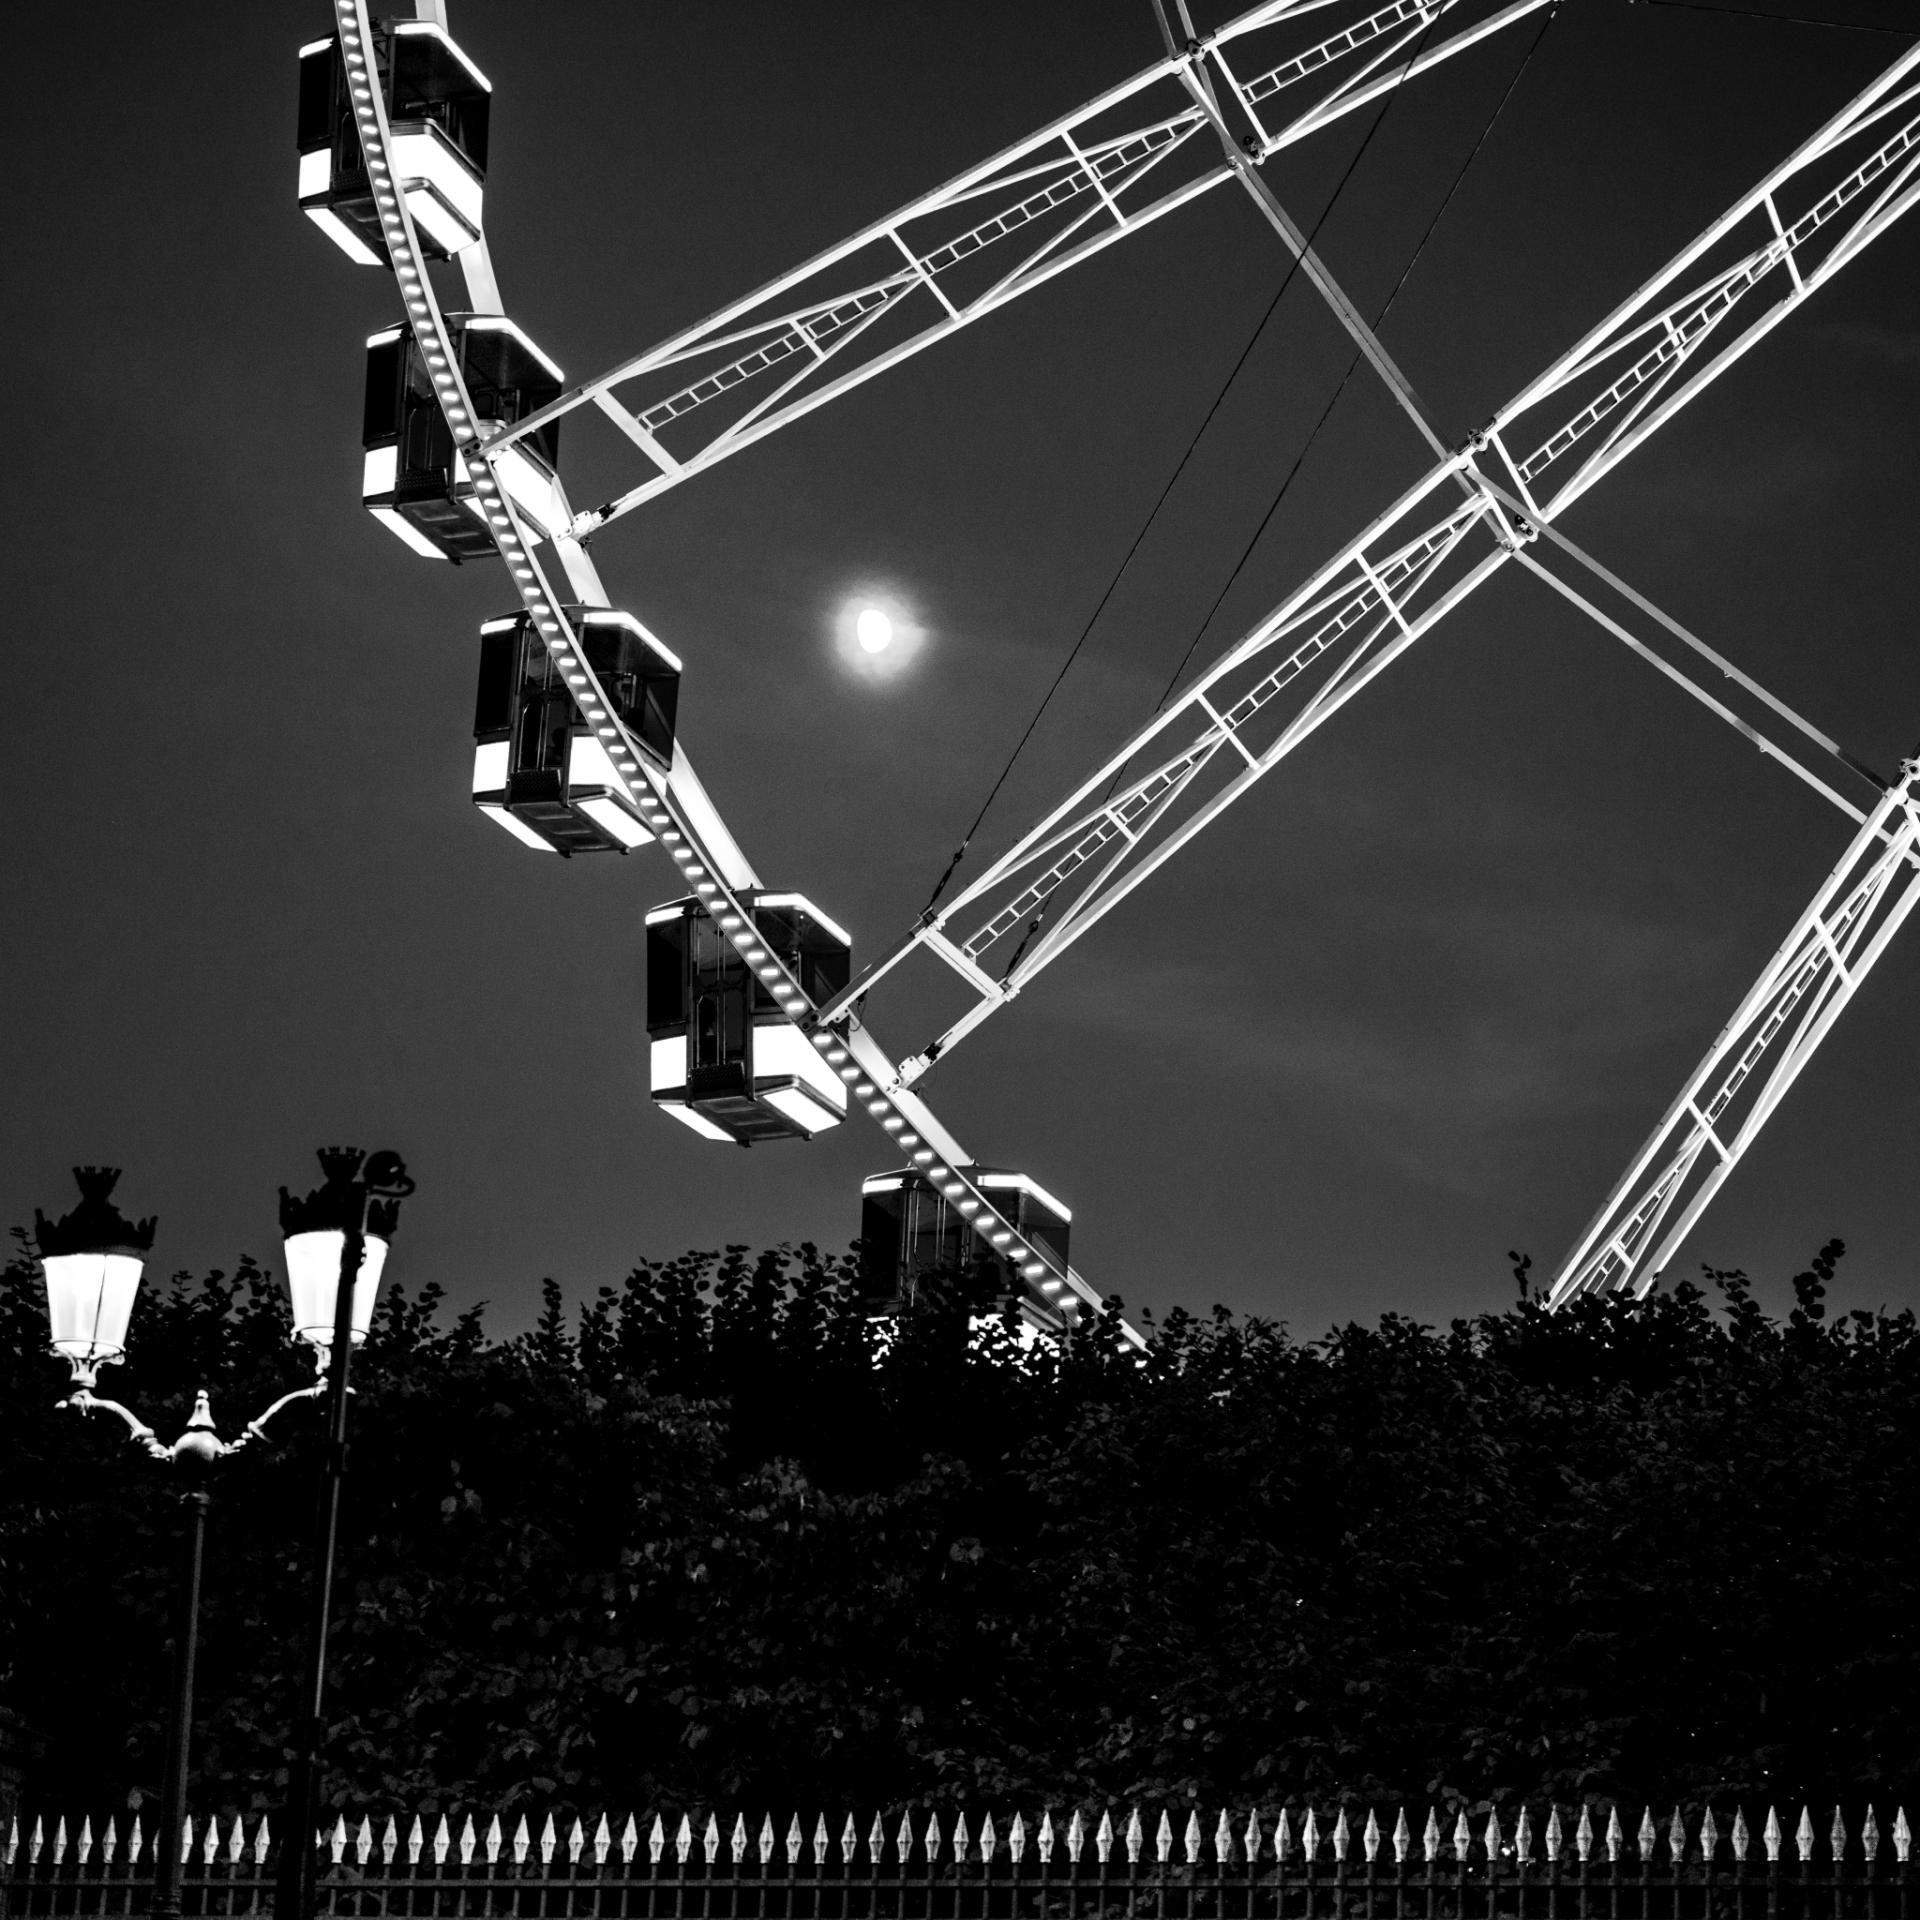 London Photography Awards Winner - Ferris Wheel in the moonlight